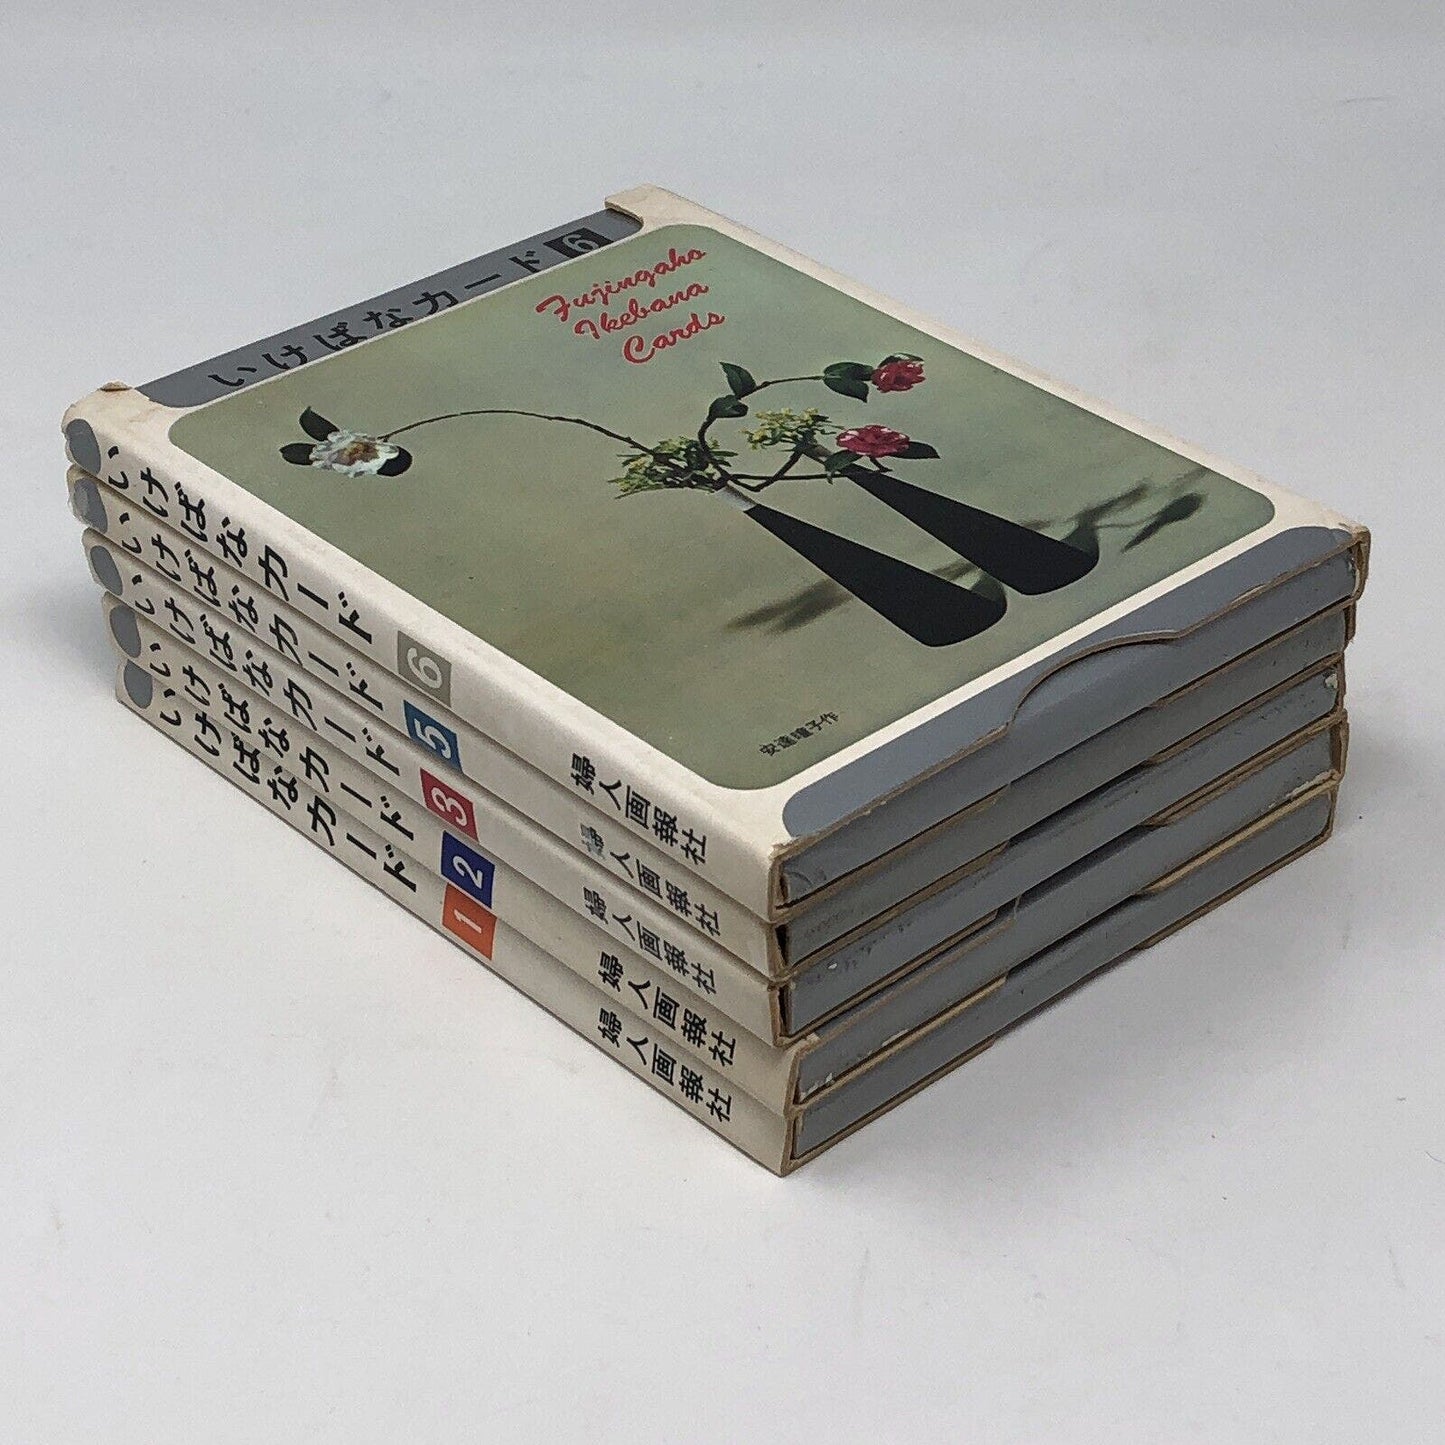 Lot 5 Vintage Fujingaho Ikebana Card Books in Japanese - Uncle Buddy's Beard & Used Books